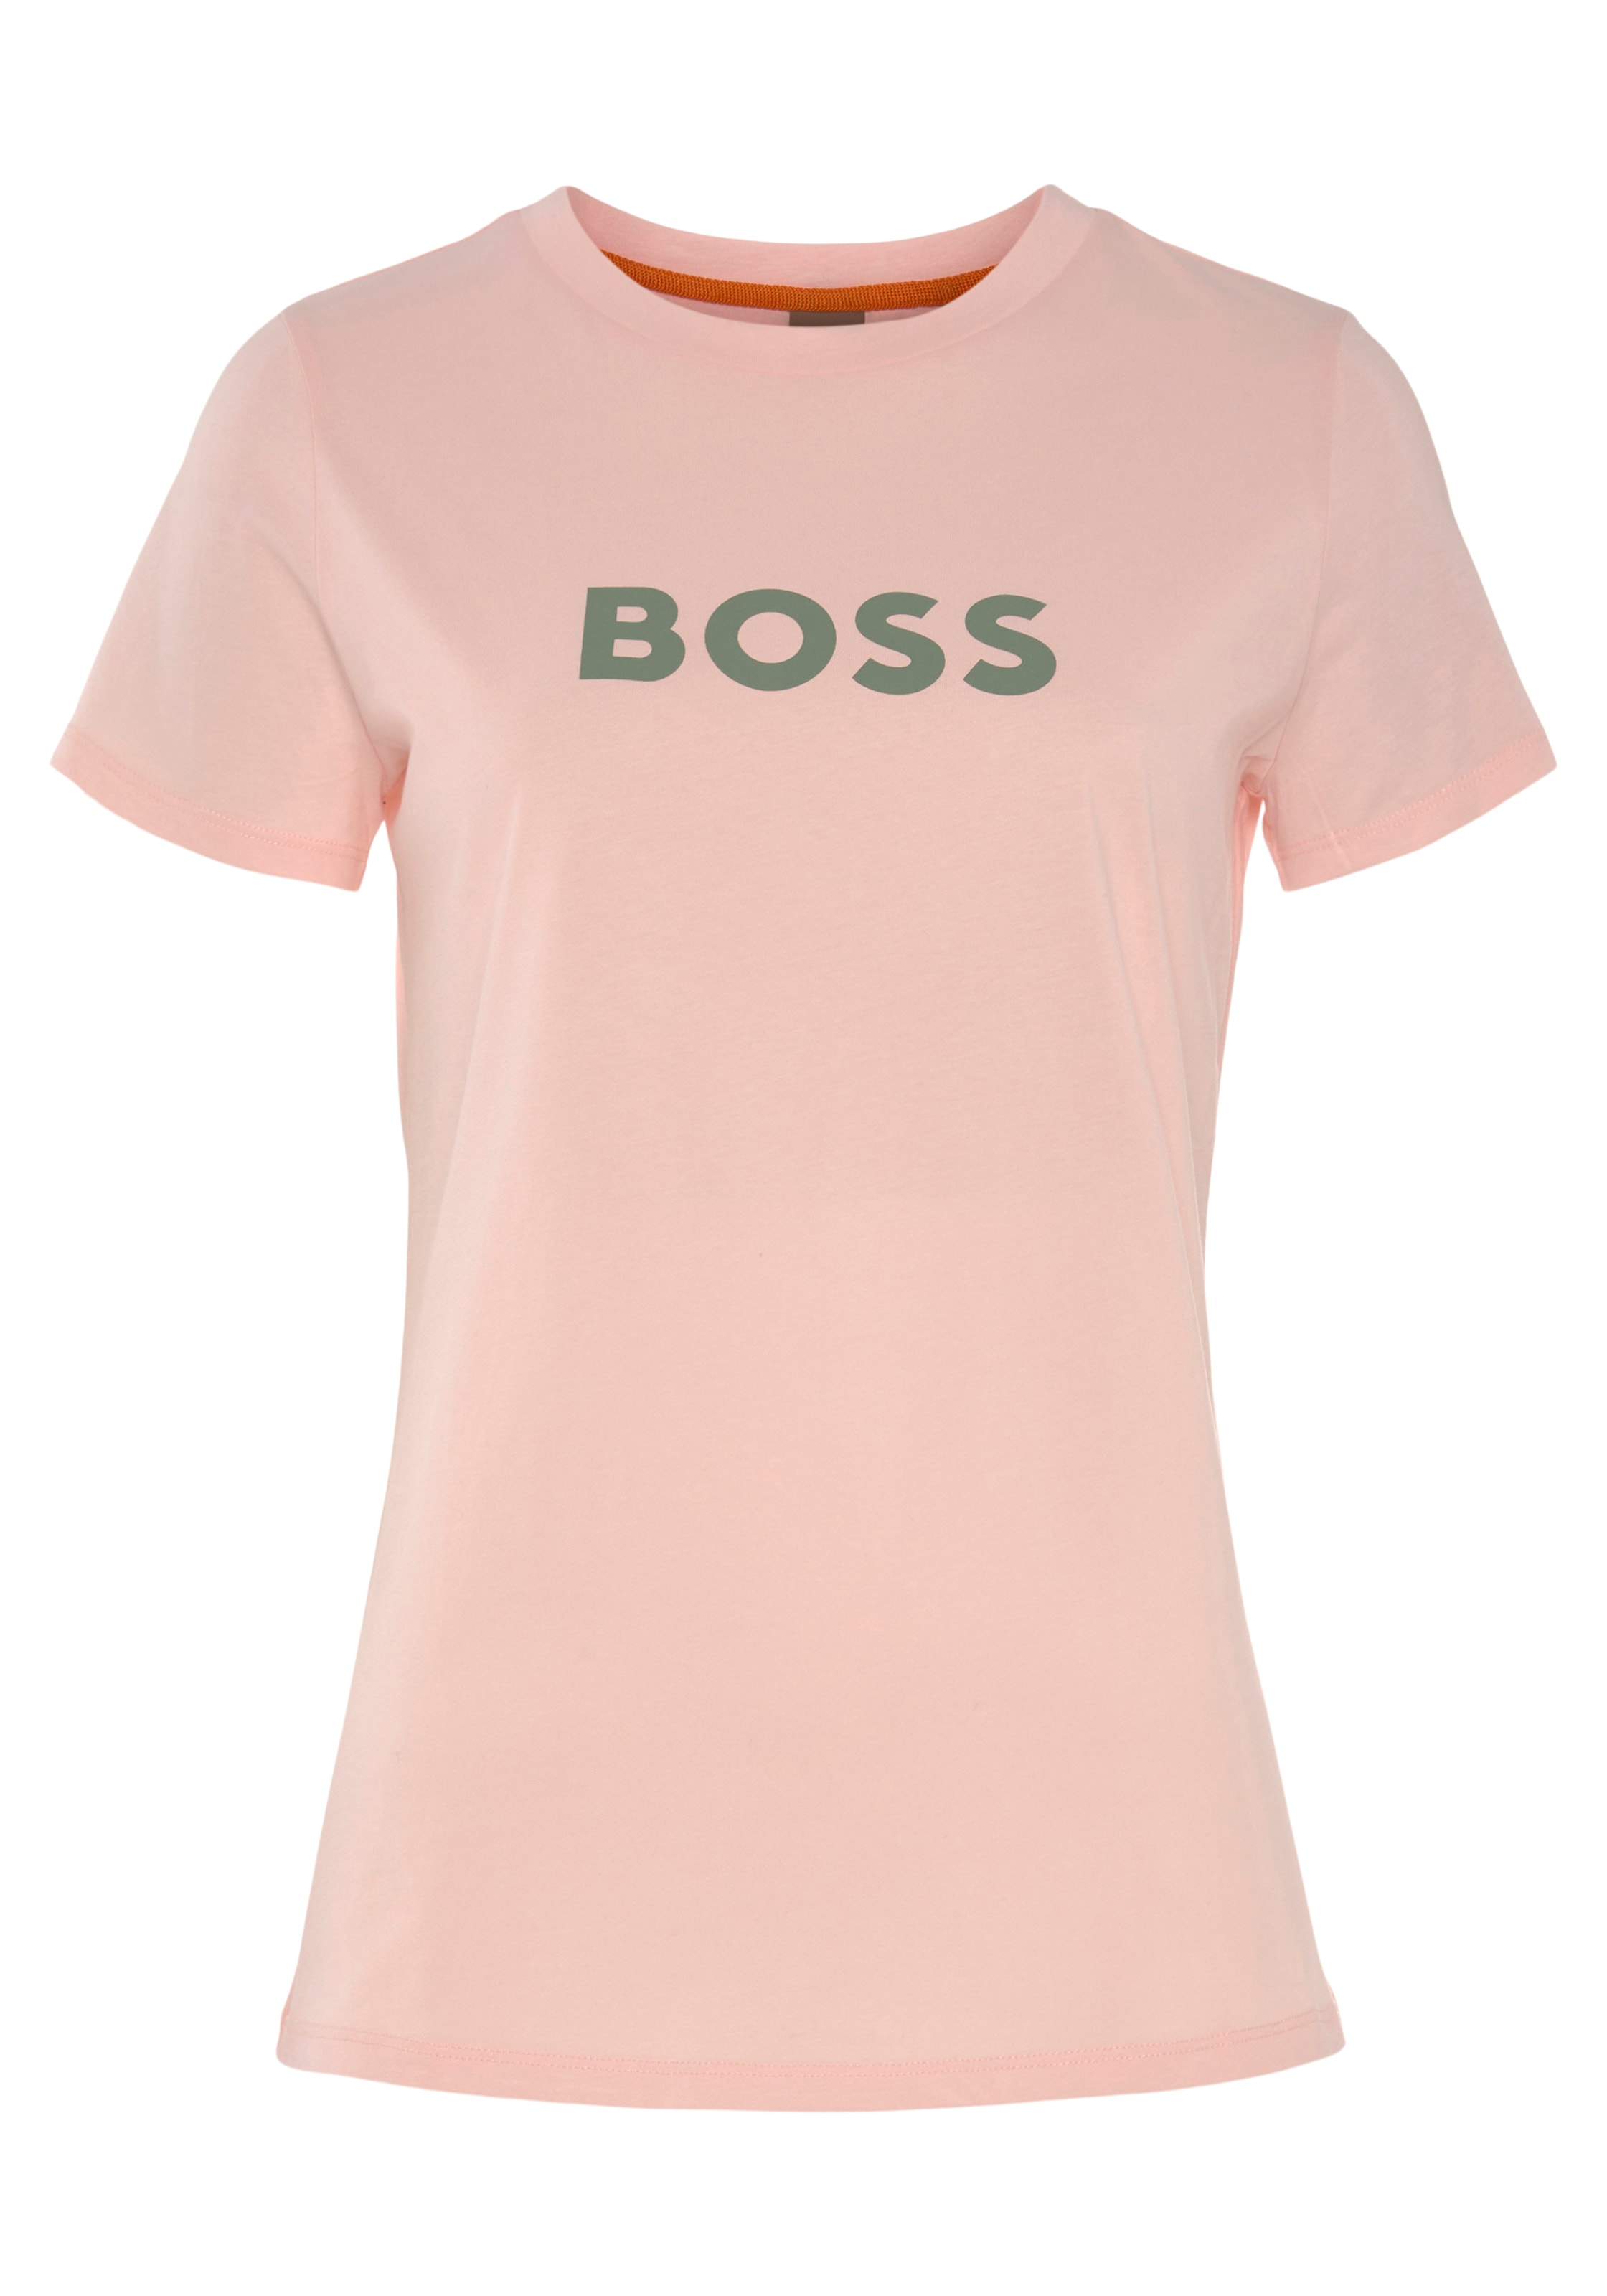 mit BOSS Brust BOSS »C_Elogo_5«, Logoschriftzug auf (1 online ORANGE T-Shirt bei der tlg.),